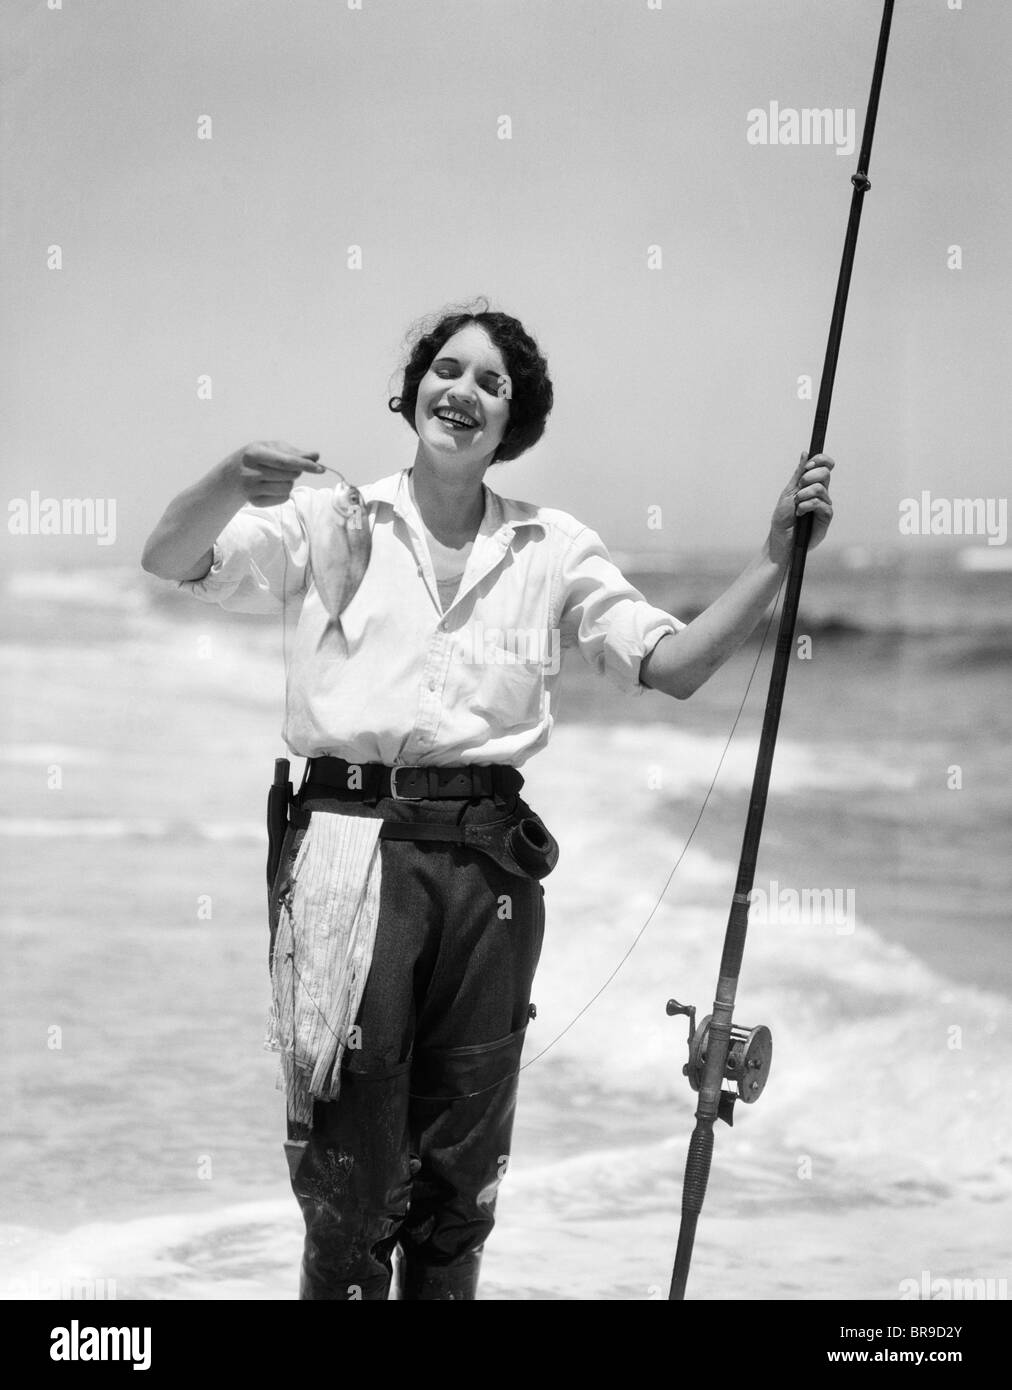 https://c8.alamy.com/comp/BR9D2Y/1920s-1930s-smiling-woman-standing-in-ocean-surf-wearing-rubber-waders-BR9D2Y.jpg